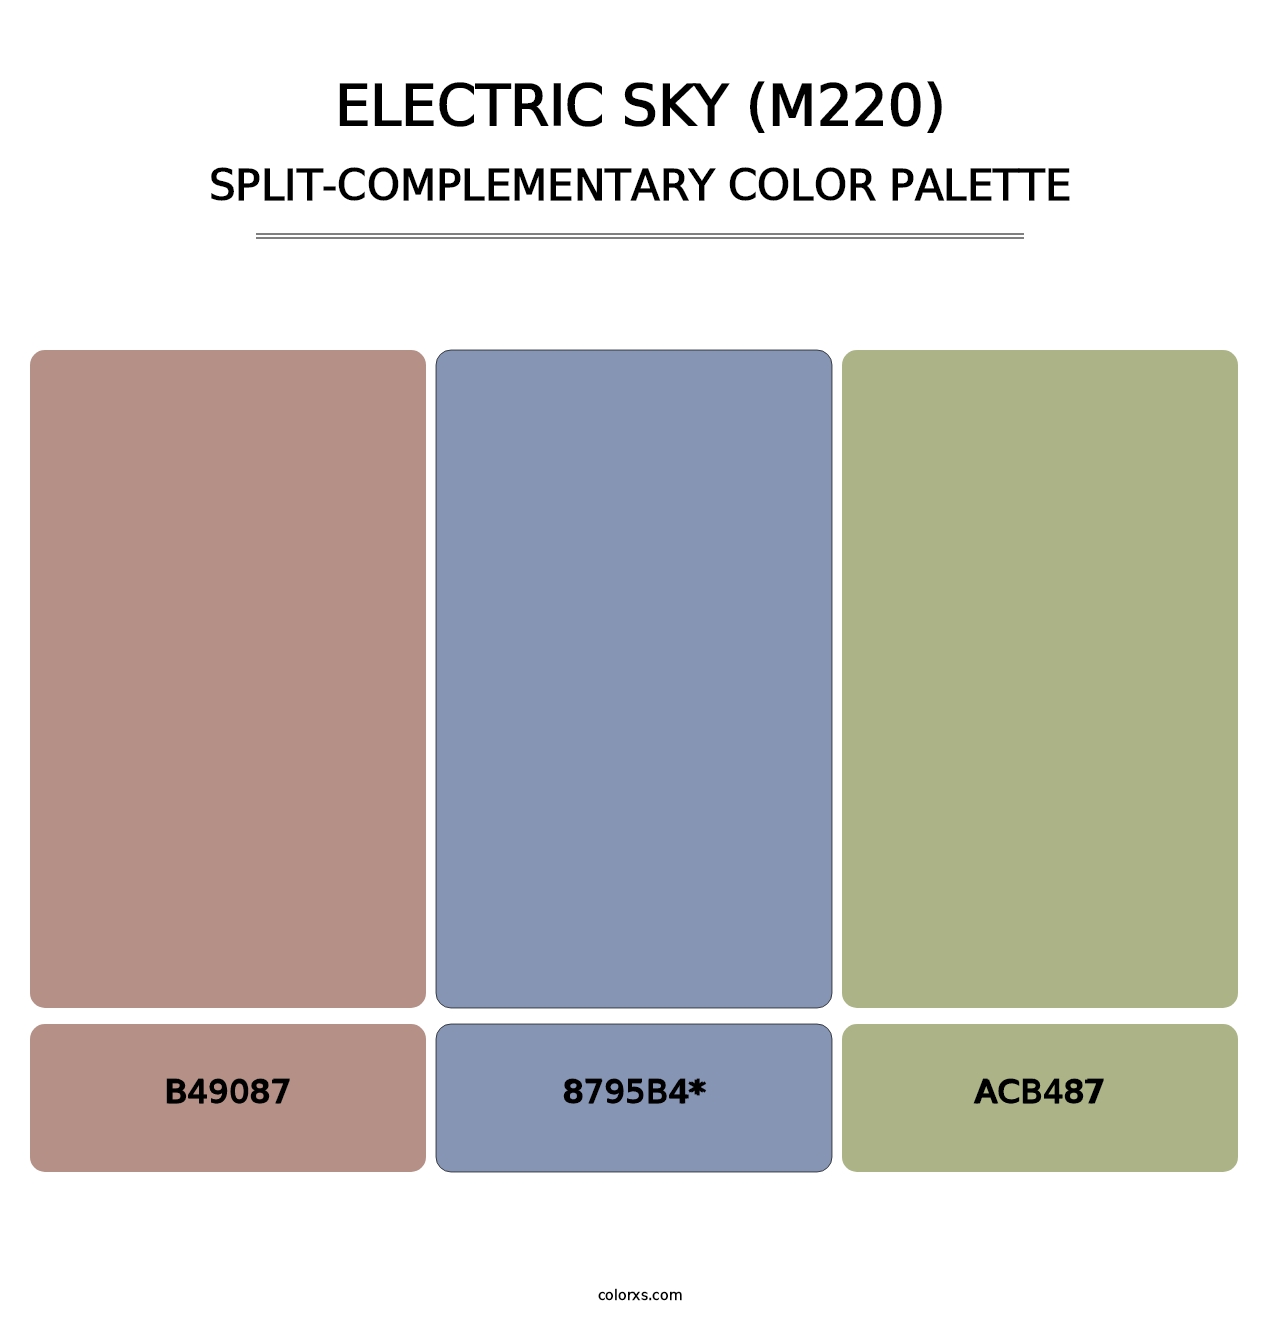 Electric Sky (M220) - Split-Complementary Color Palette